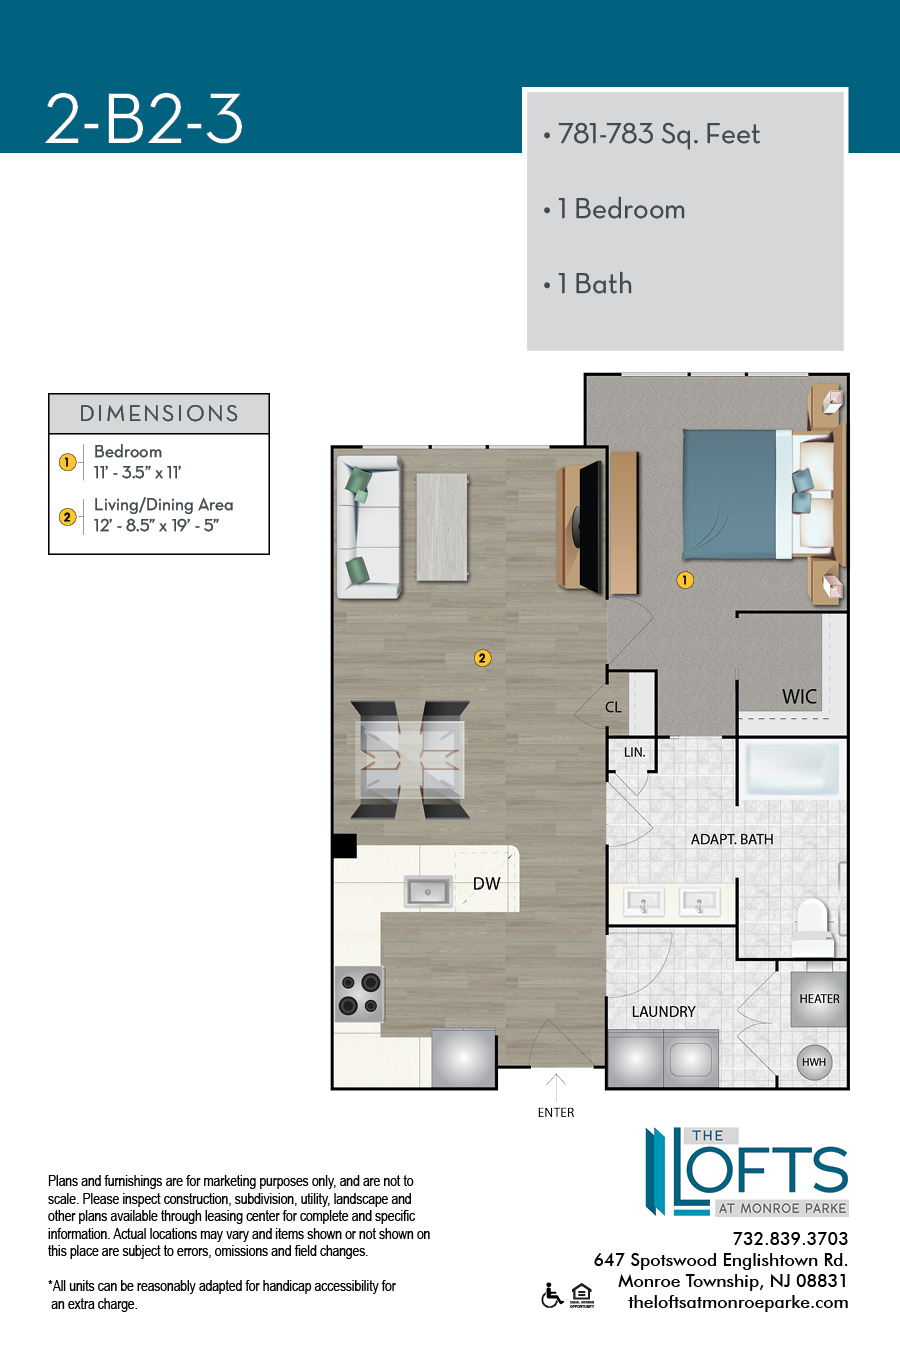 The Lofts at Monroe Park Apartment Floor Plan 2-B2-3